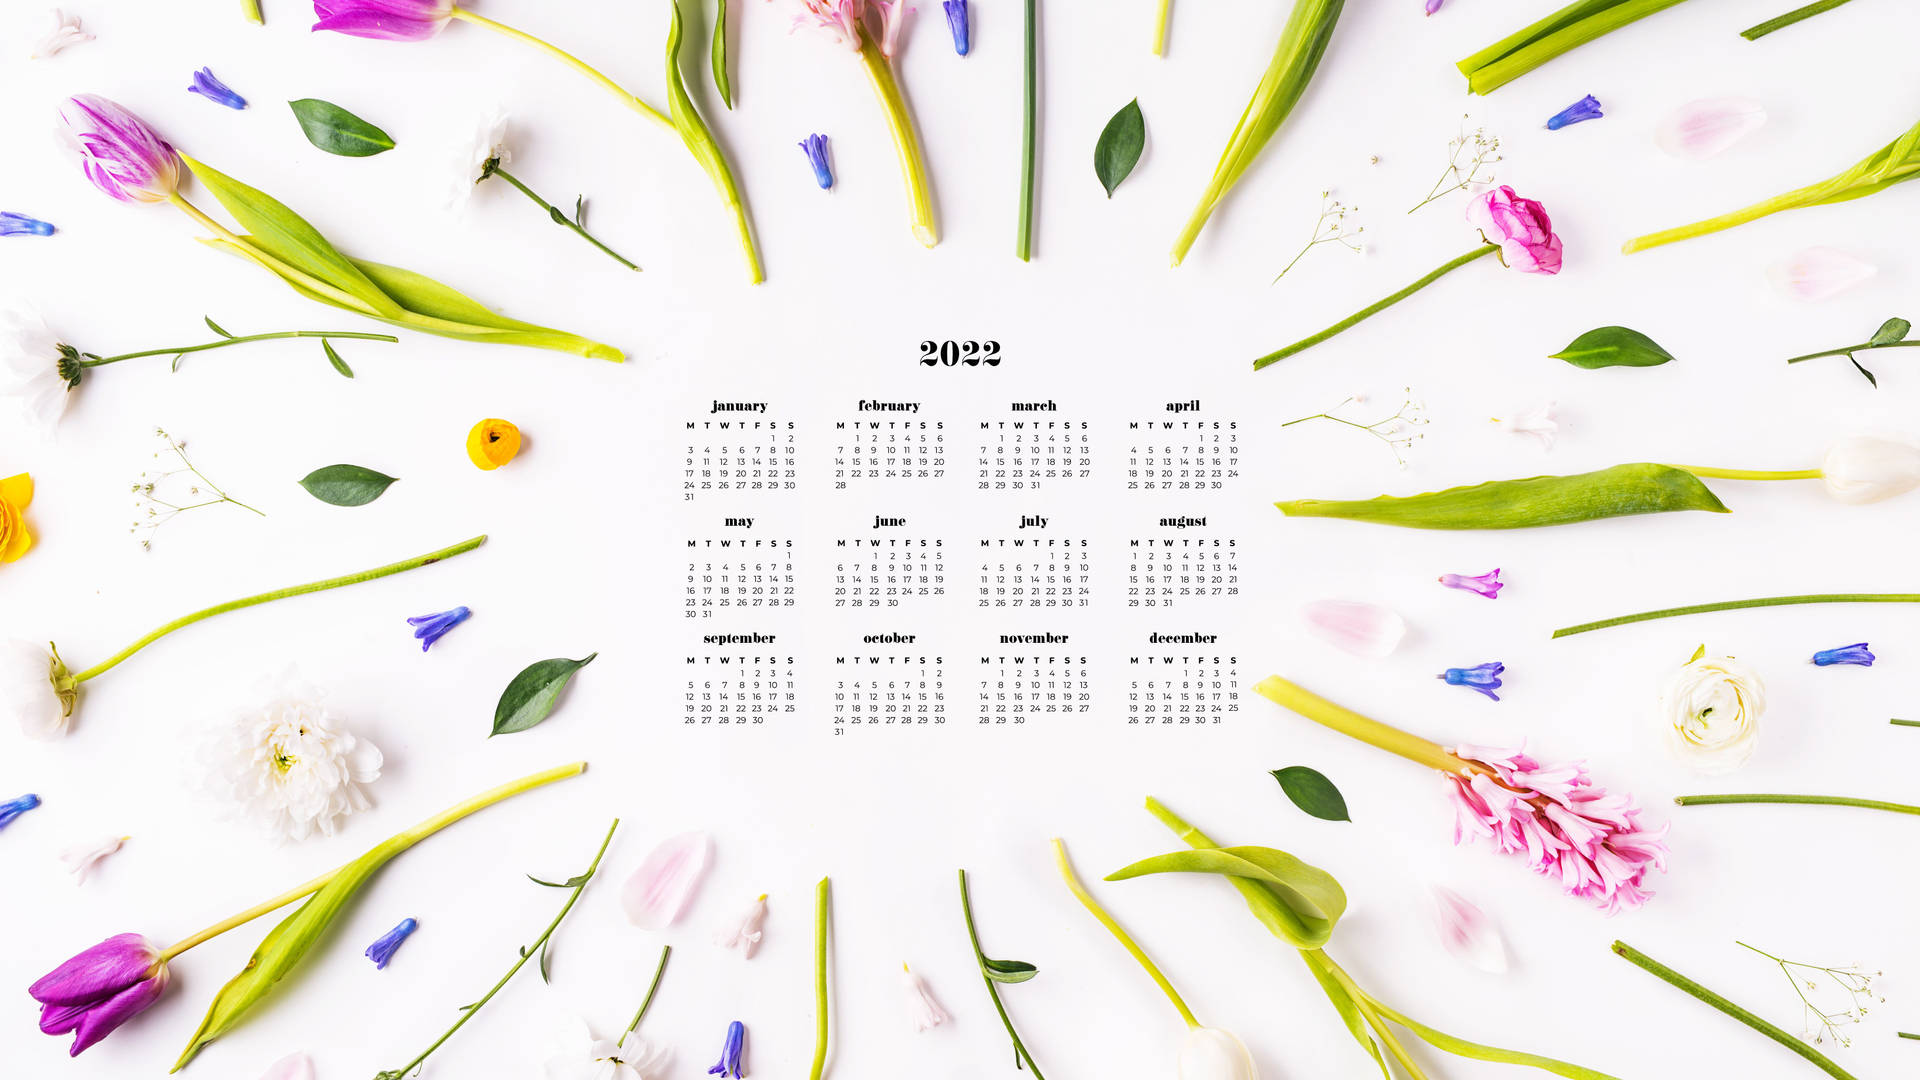 Tulips 2022 Calendar Background